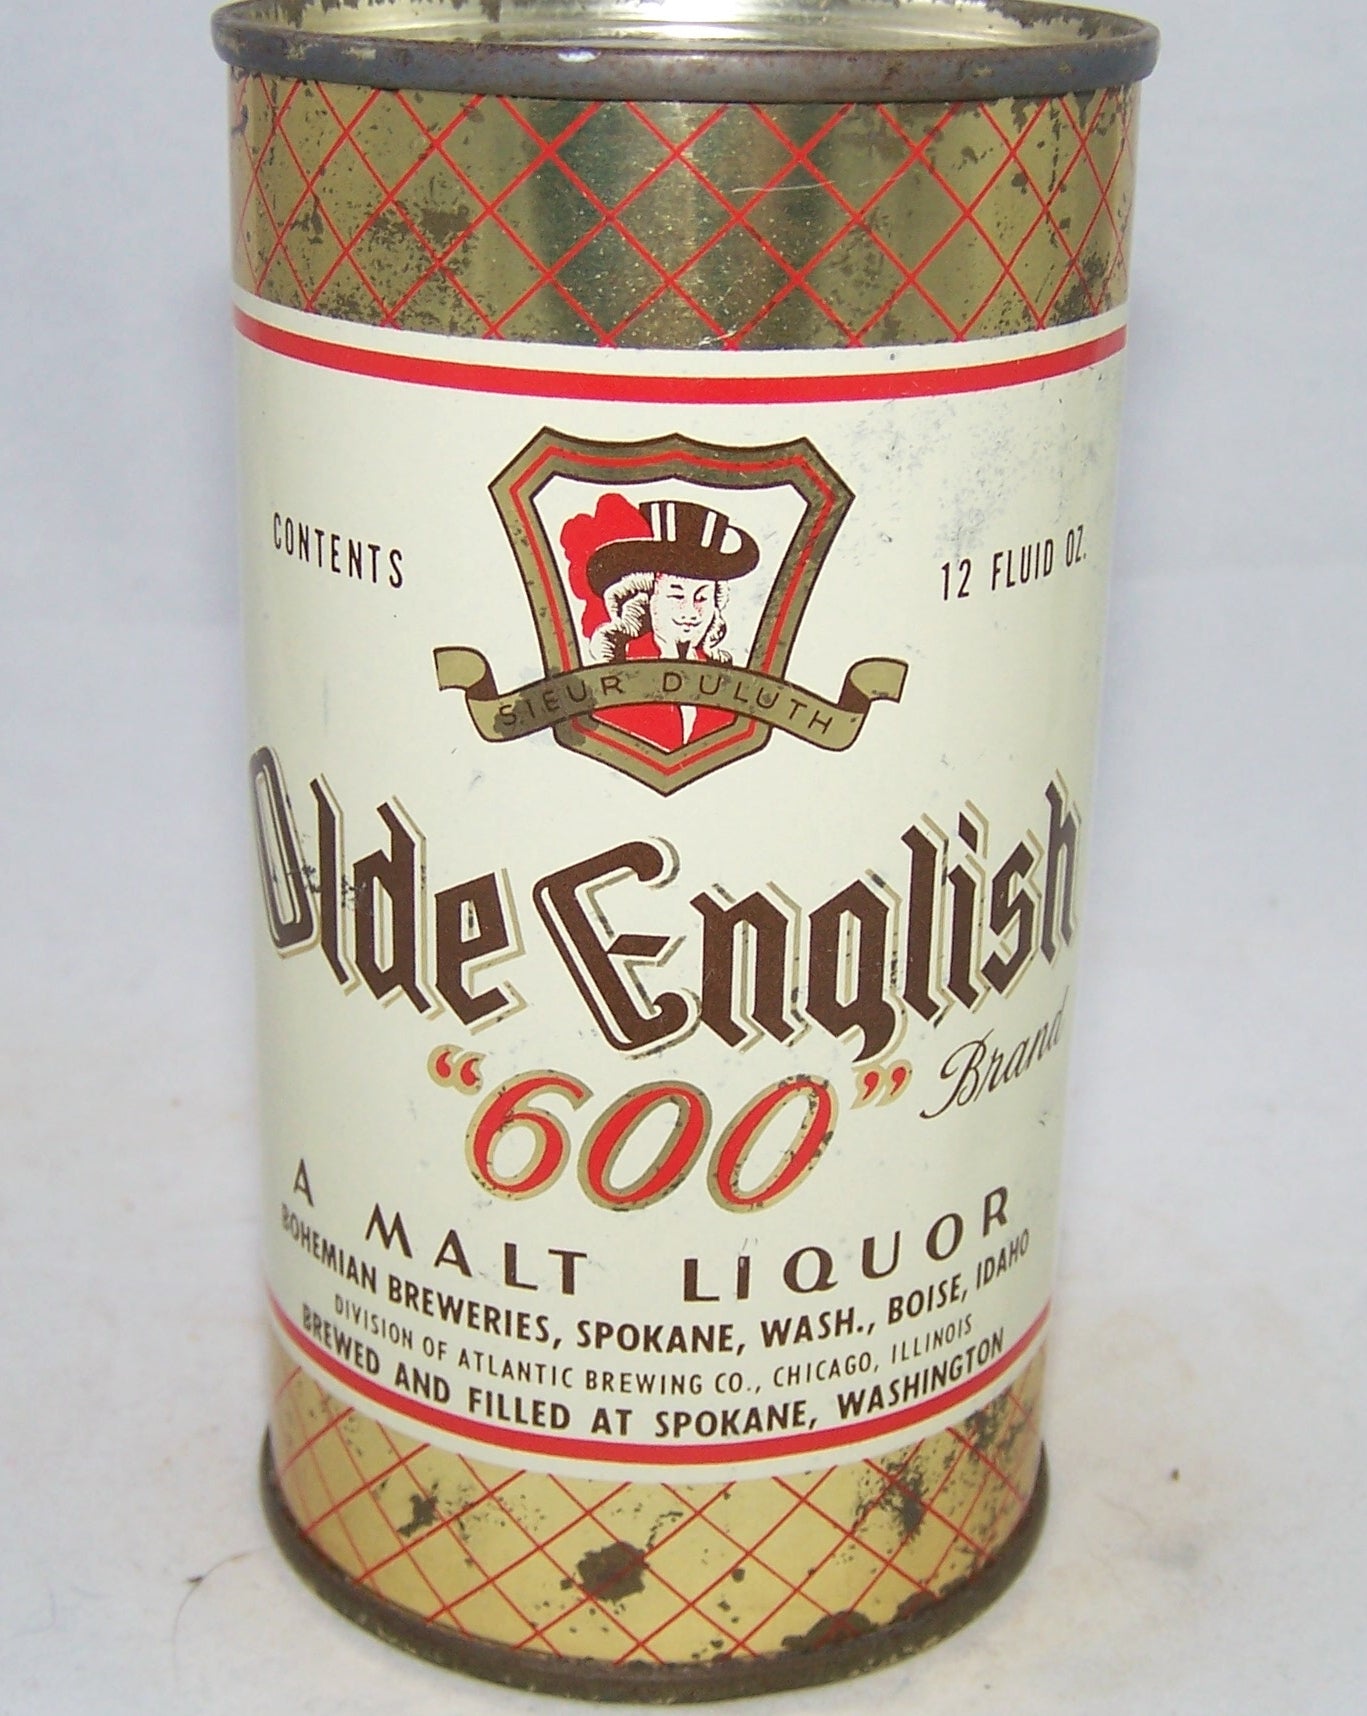 Olde English "600" Brand Malt Liquor, USBC 108-40, Grade 1- Sold on 04/06/18